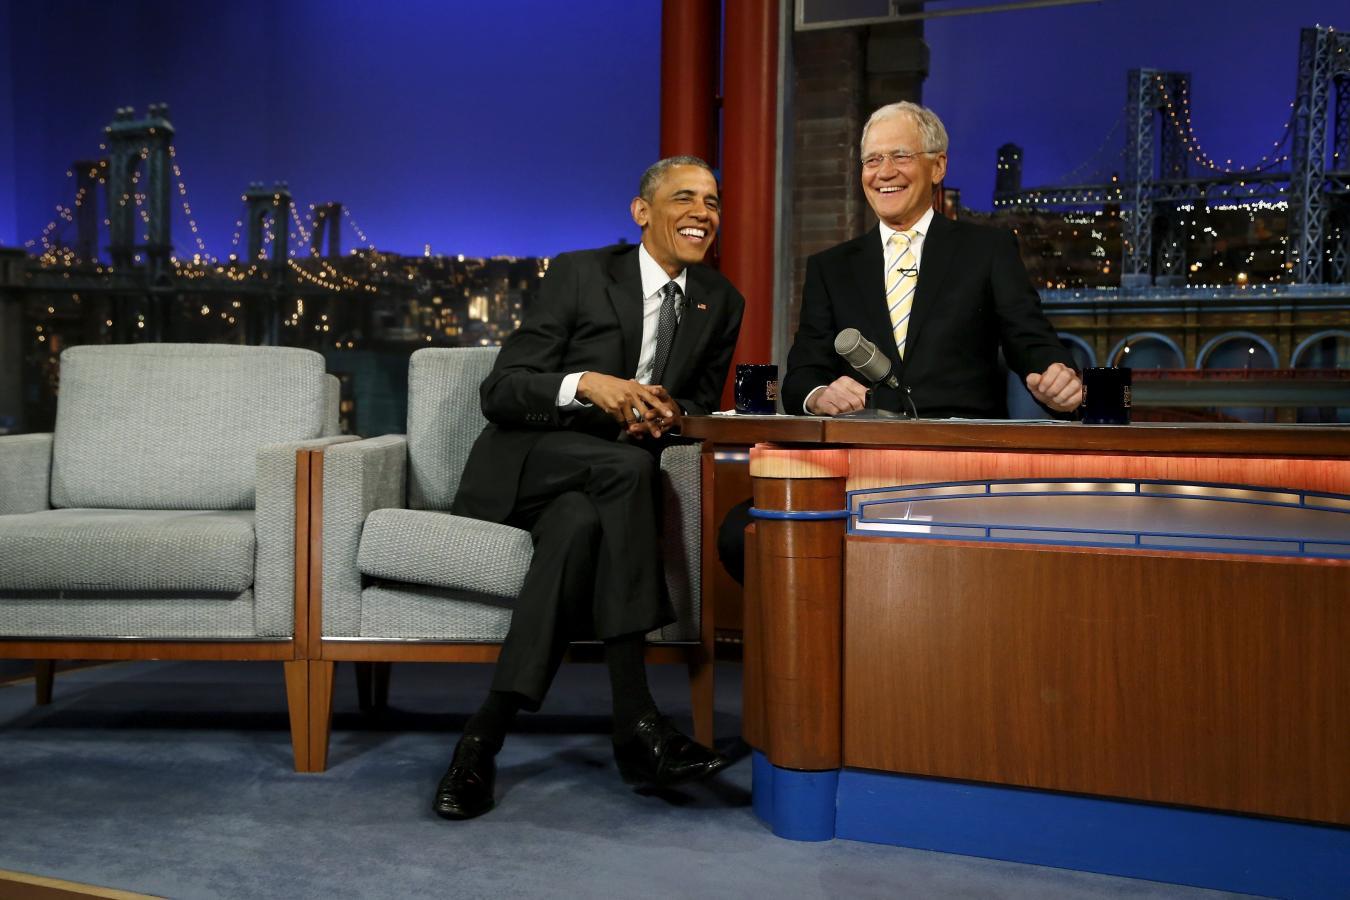 David Letterman with Barack Obama, Late Show